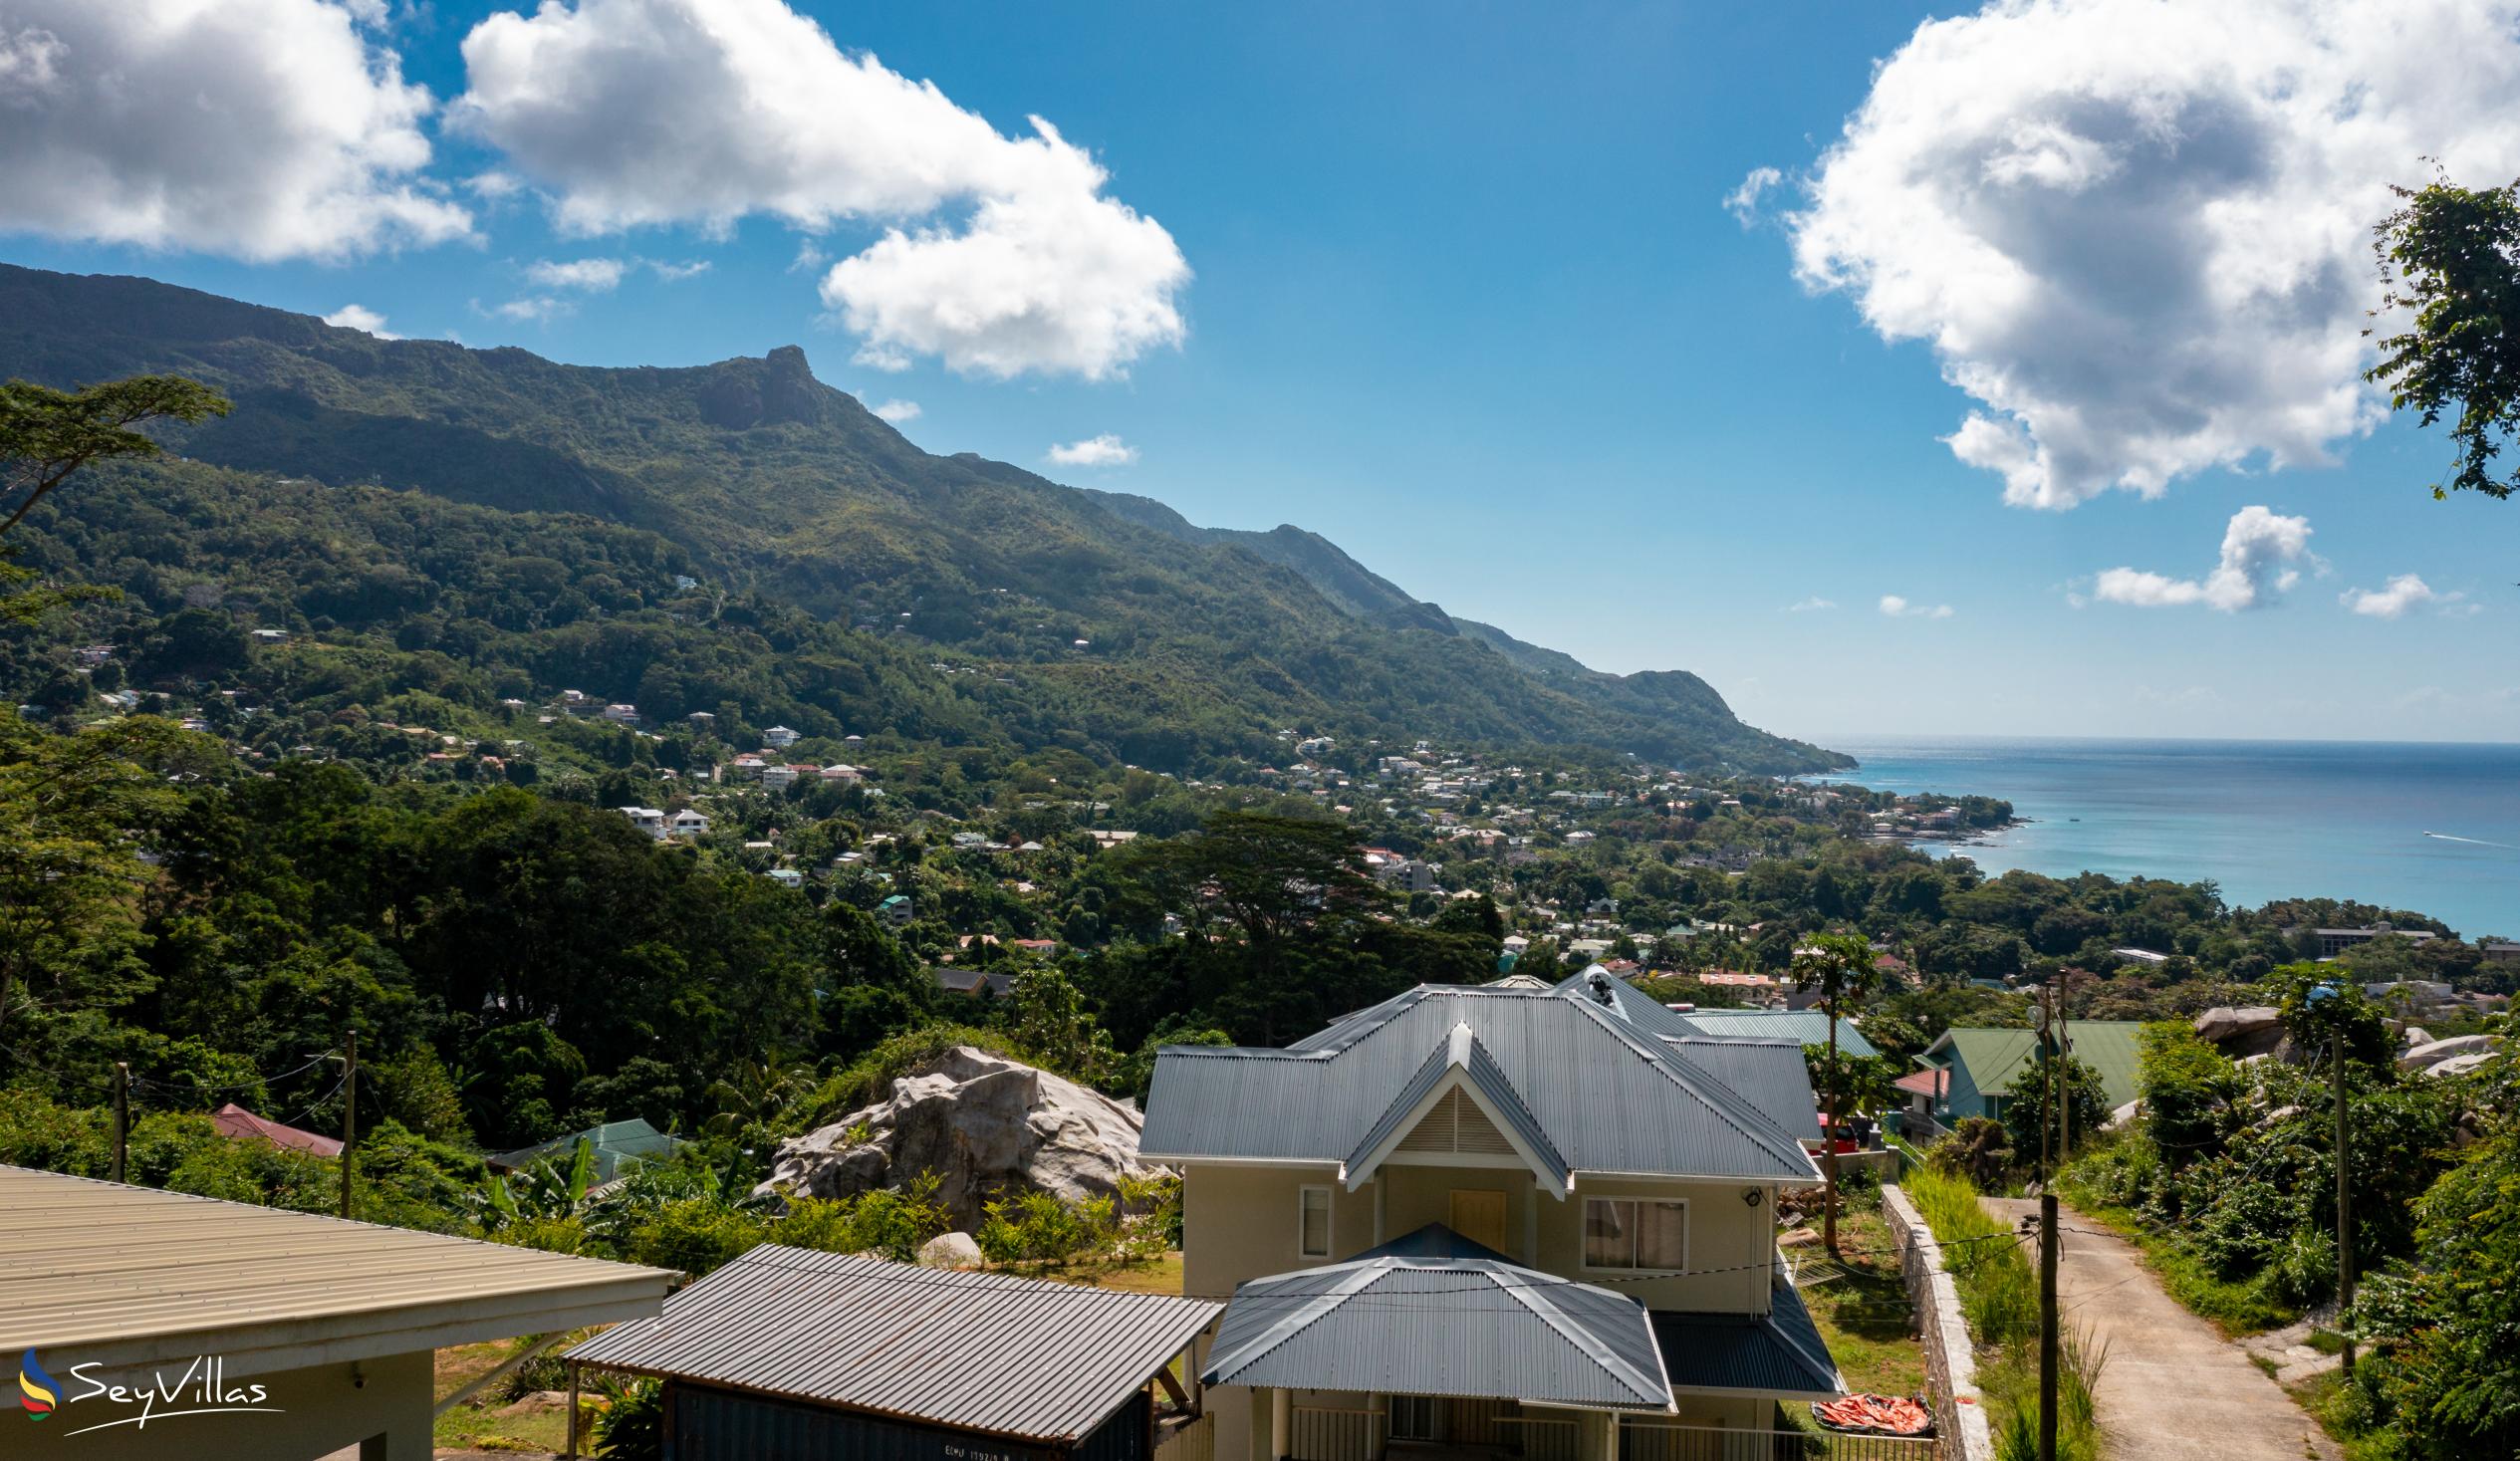 Foto 24: Roz Avel Villa - Location - Mahé (Seychelles)